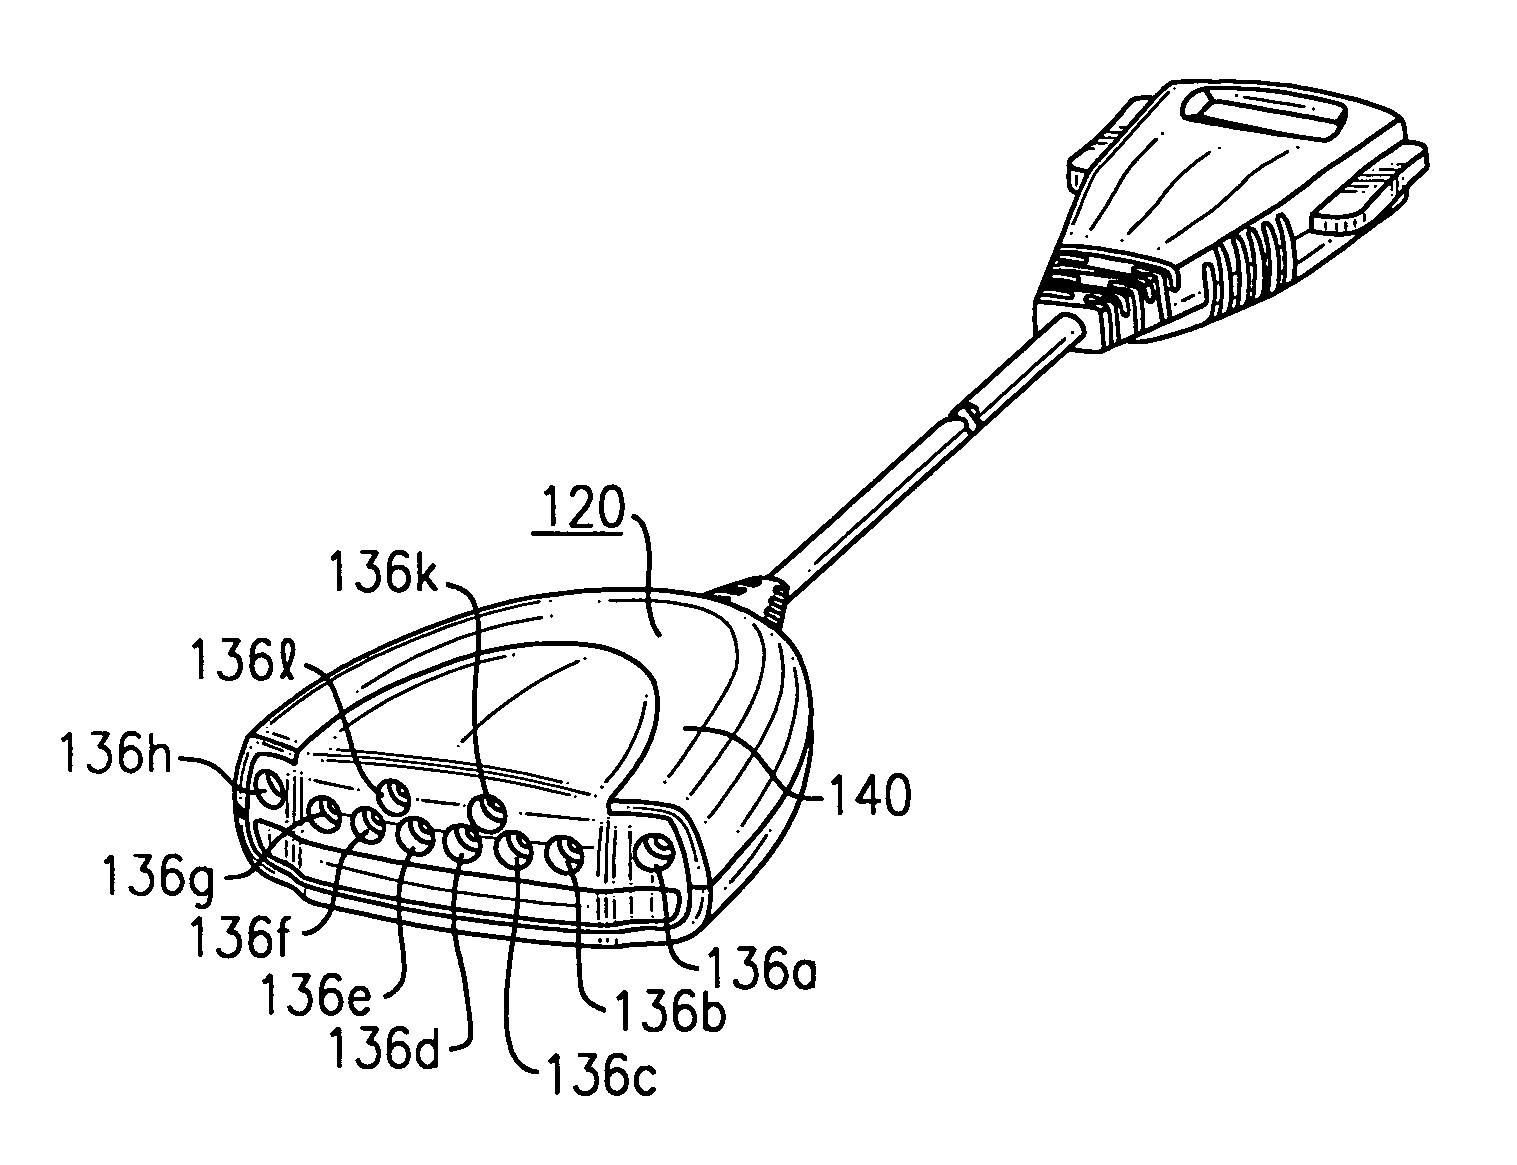 Galvanic isolation of a medical apparatus